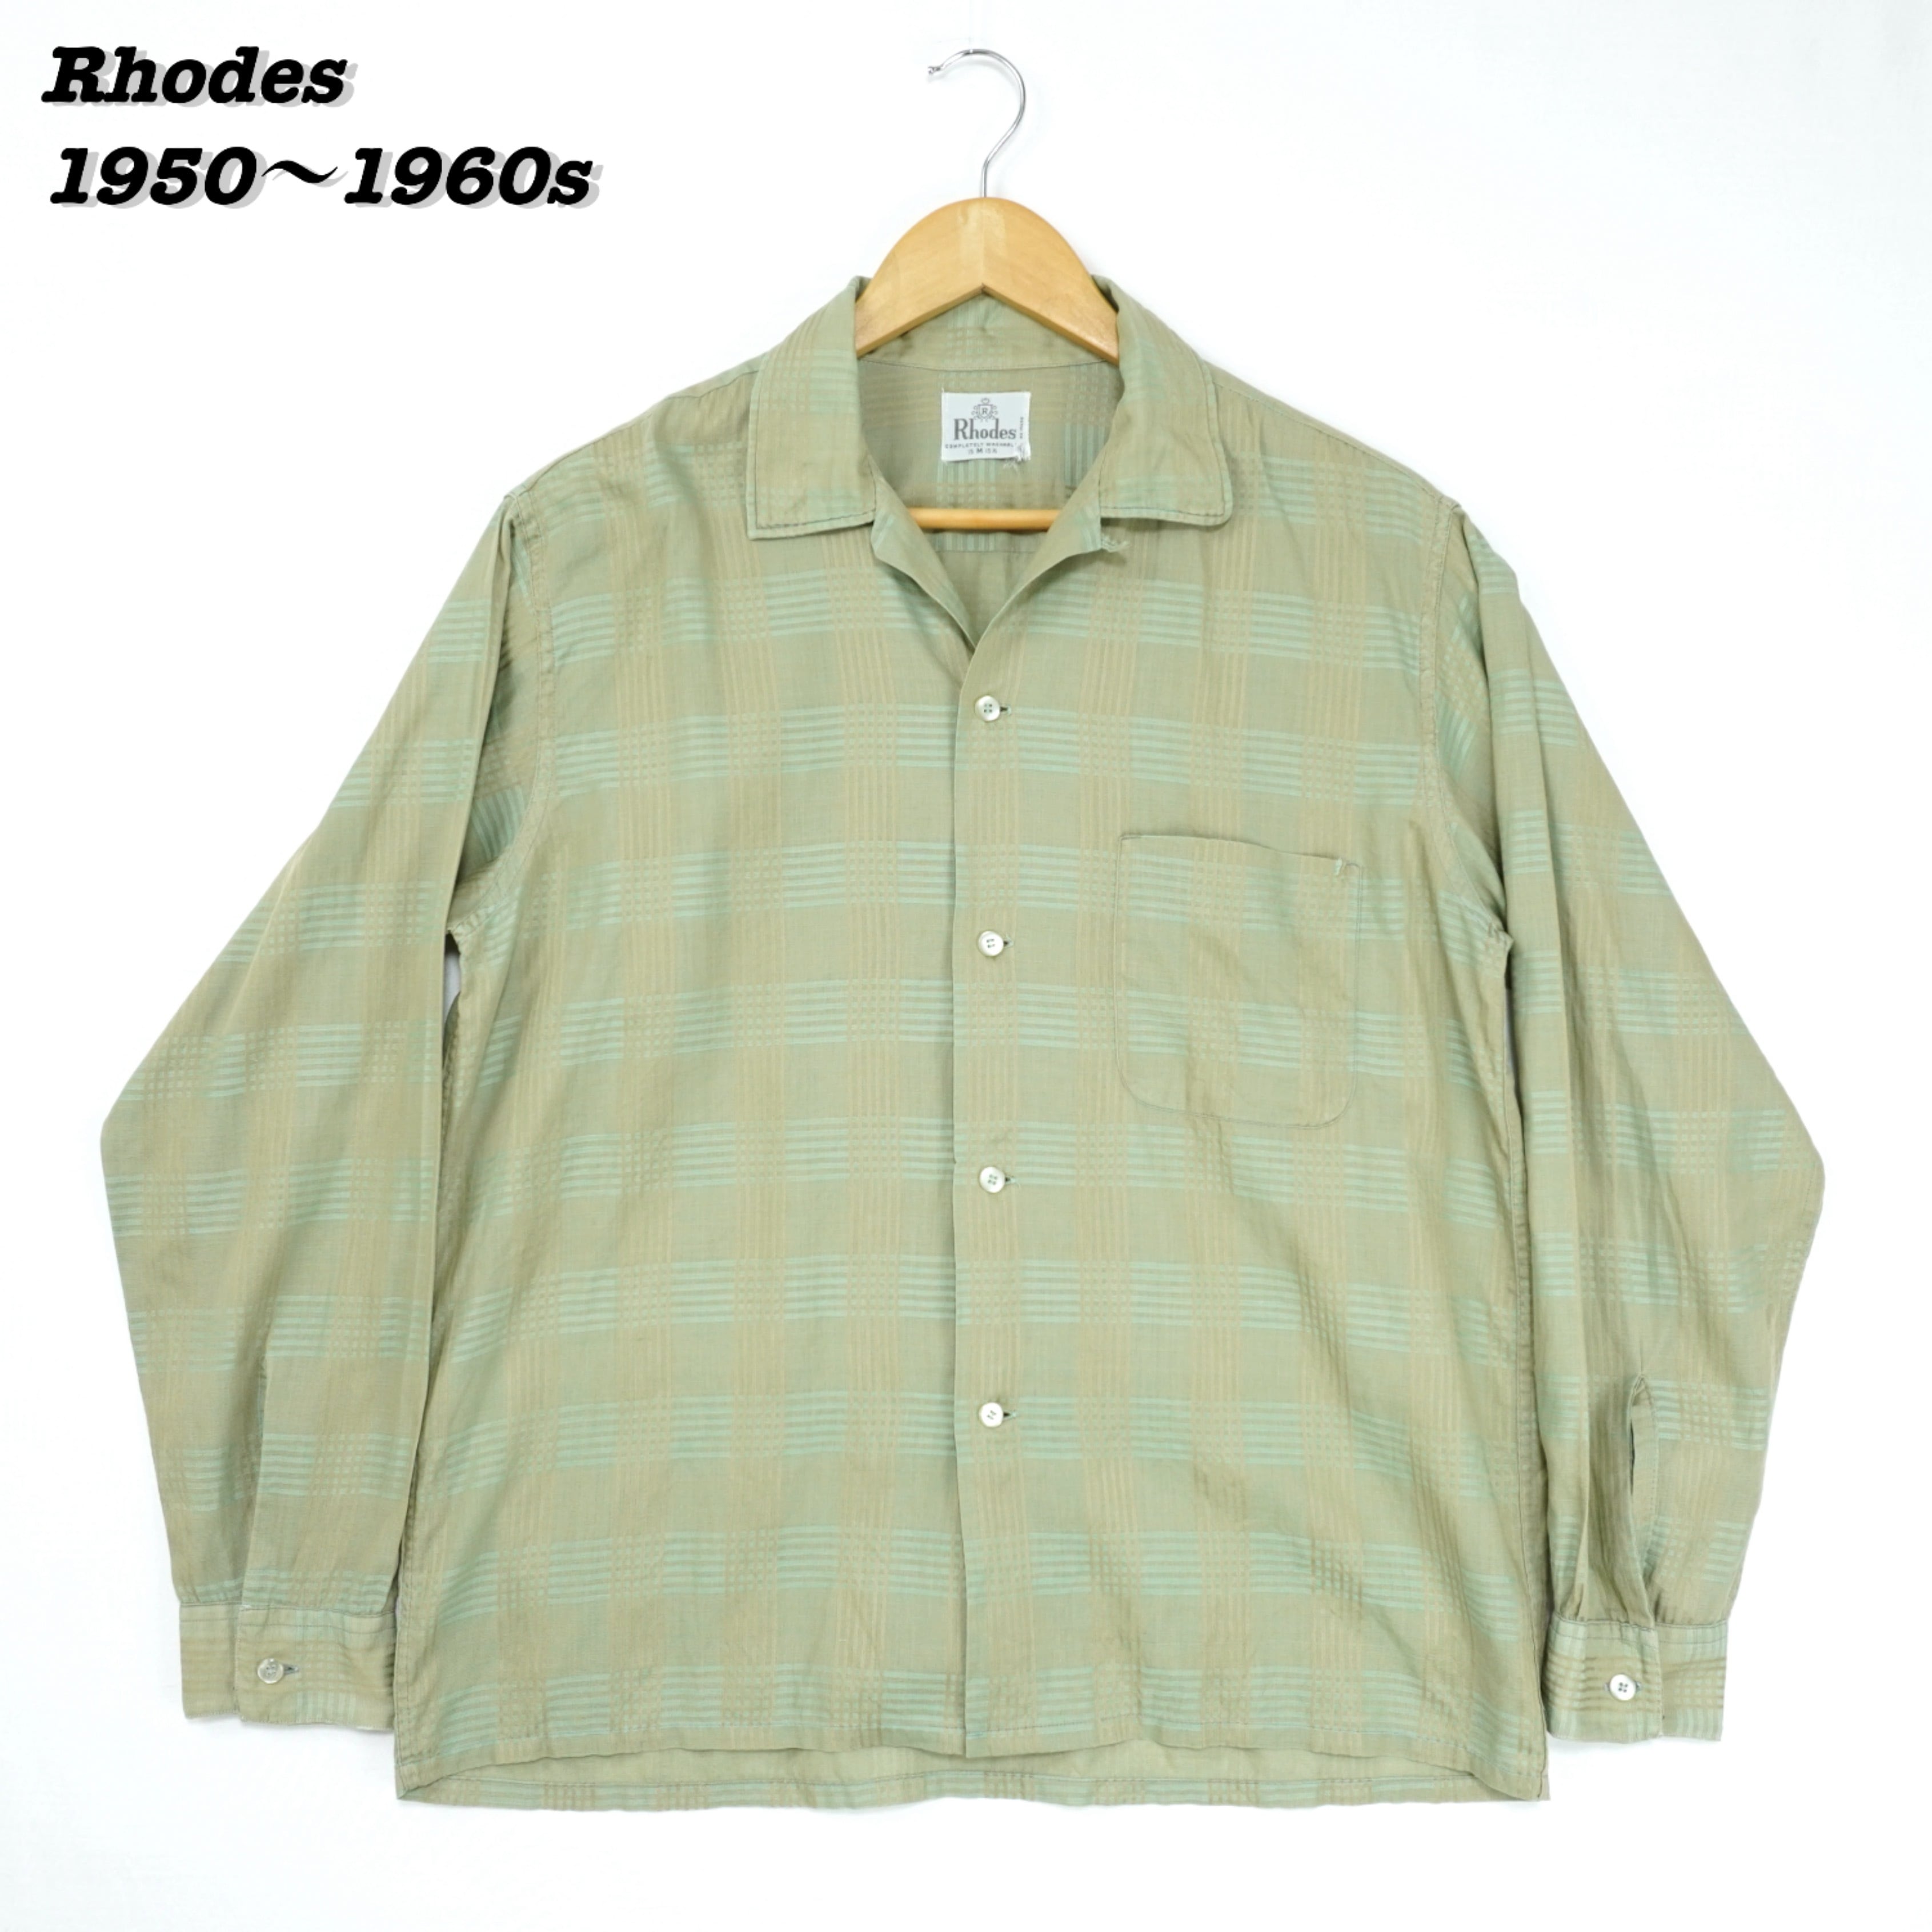 Rhodes Shirts 1950s 1960s M SHIRT23148 - シャツ